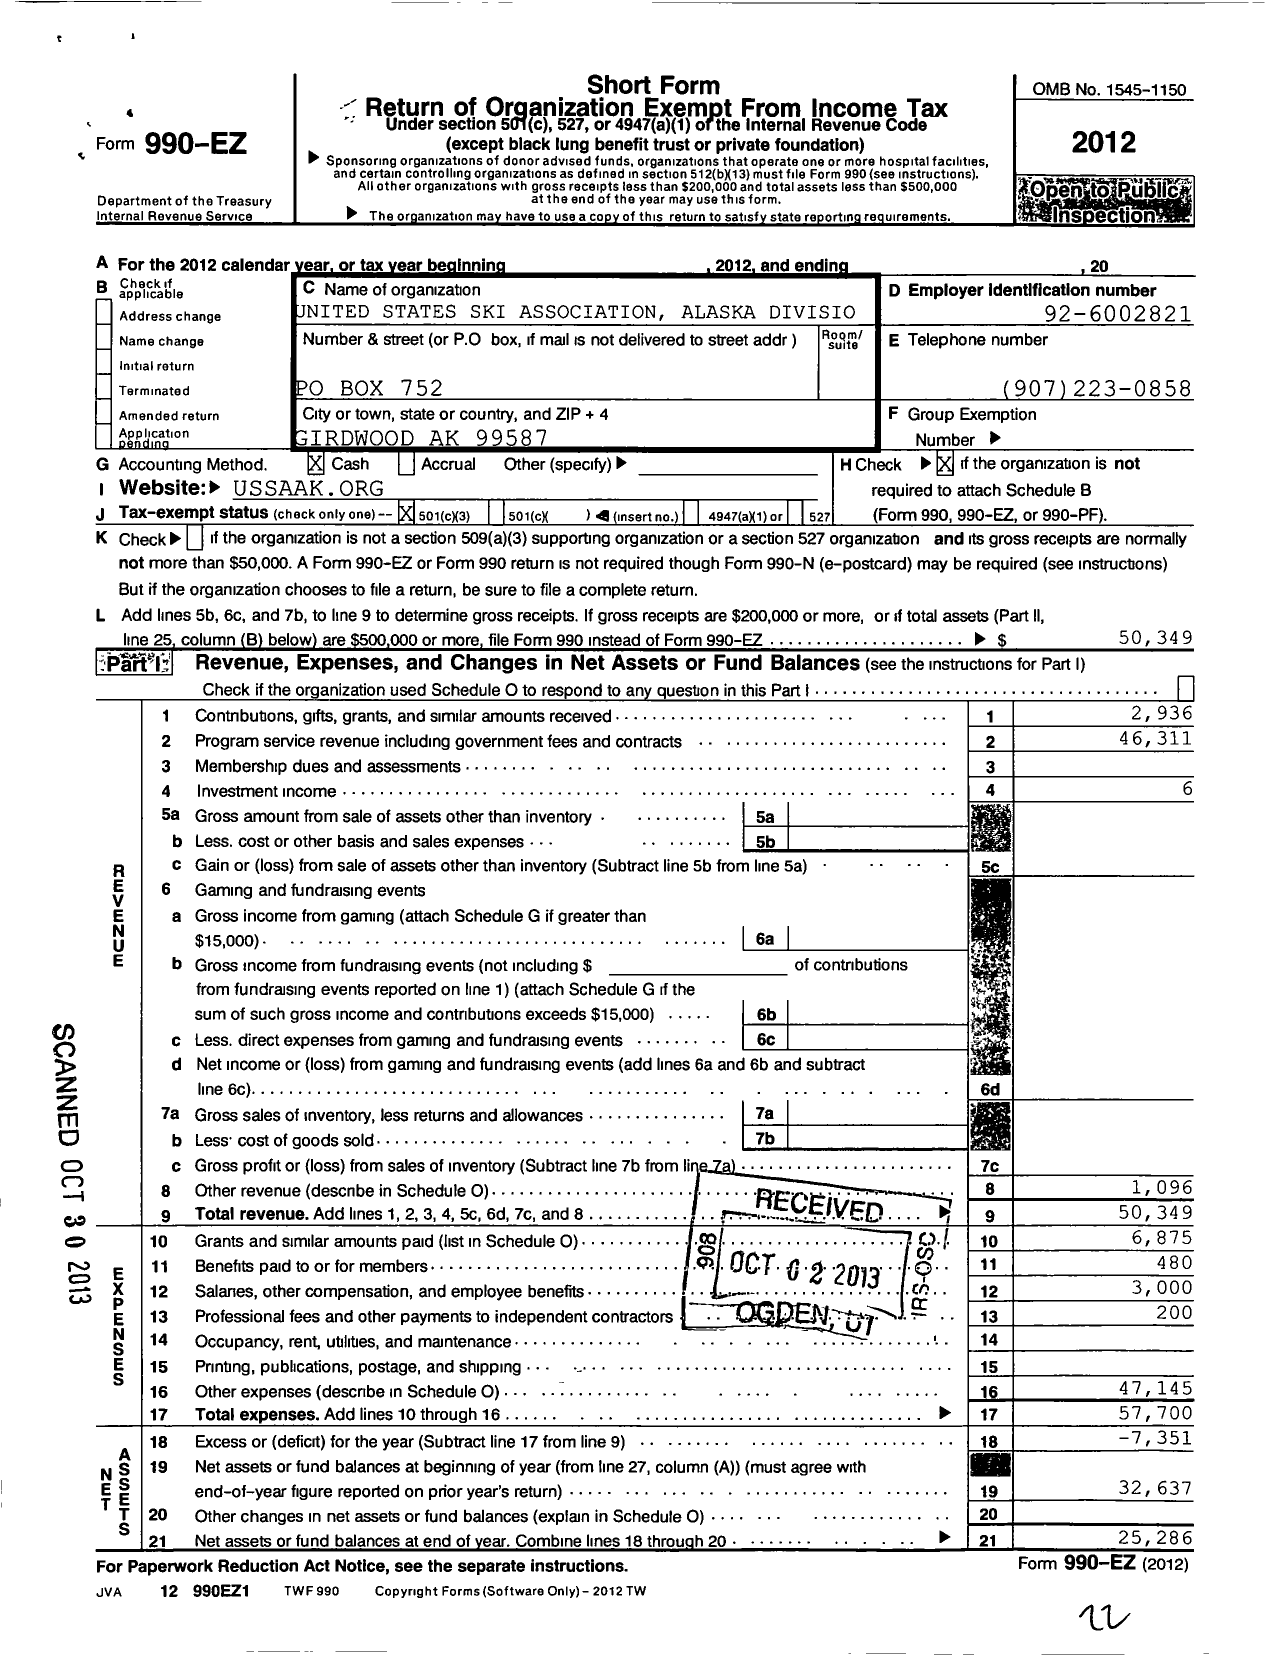 Image of first page of 2012 Form 990EZ for United States Ski Association Alaska Division